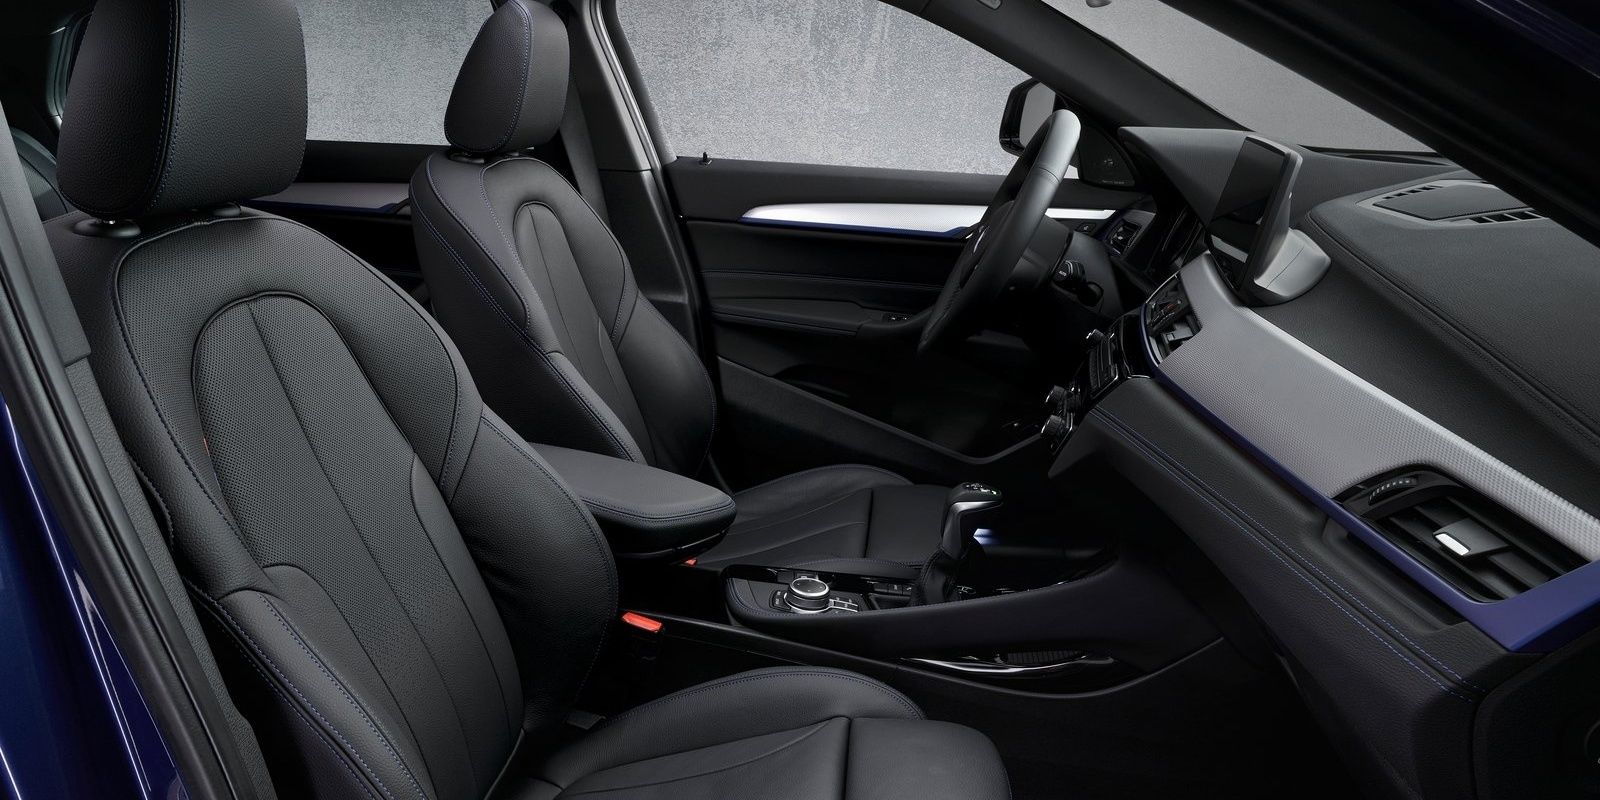 BMW X2 interior side view